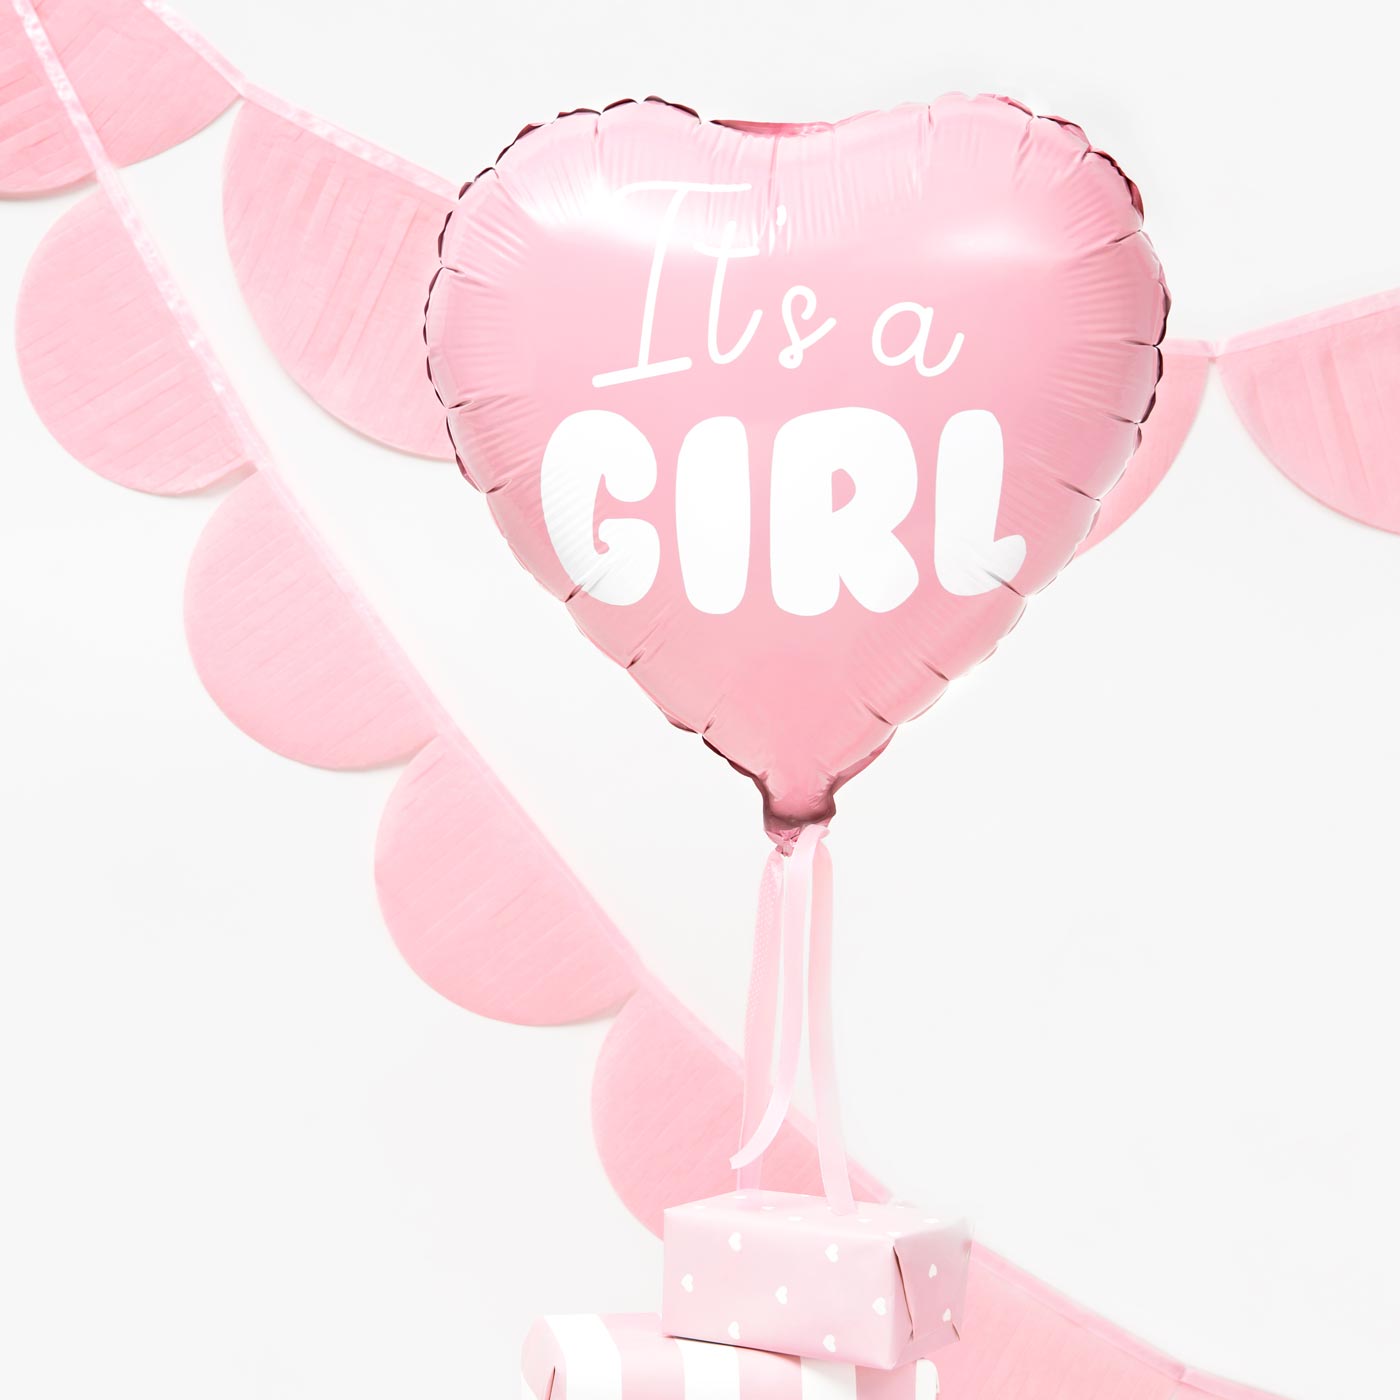 Star balloon foil it's a girl pink